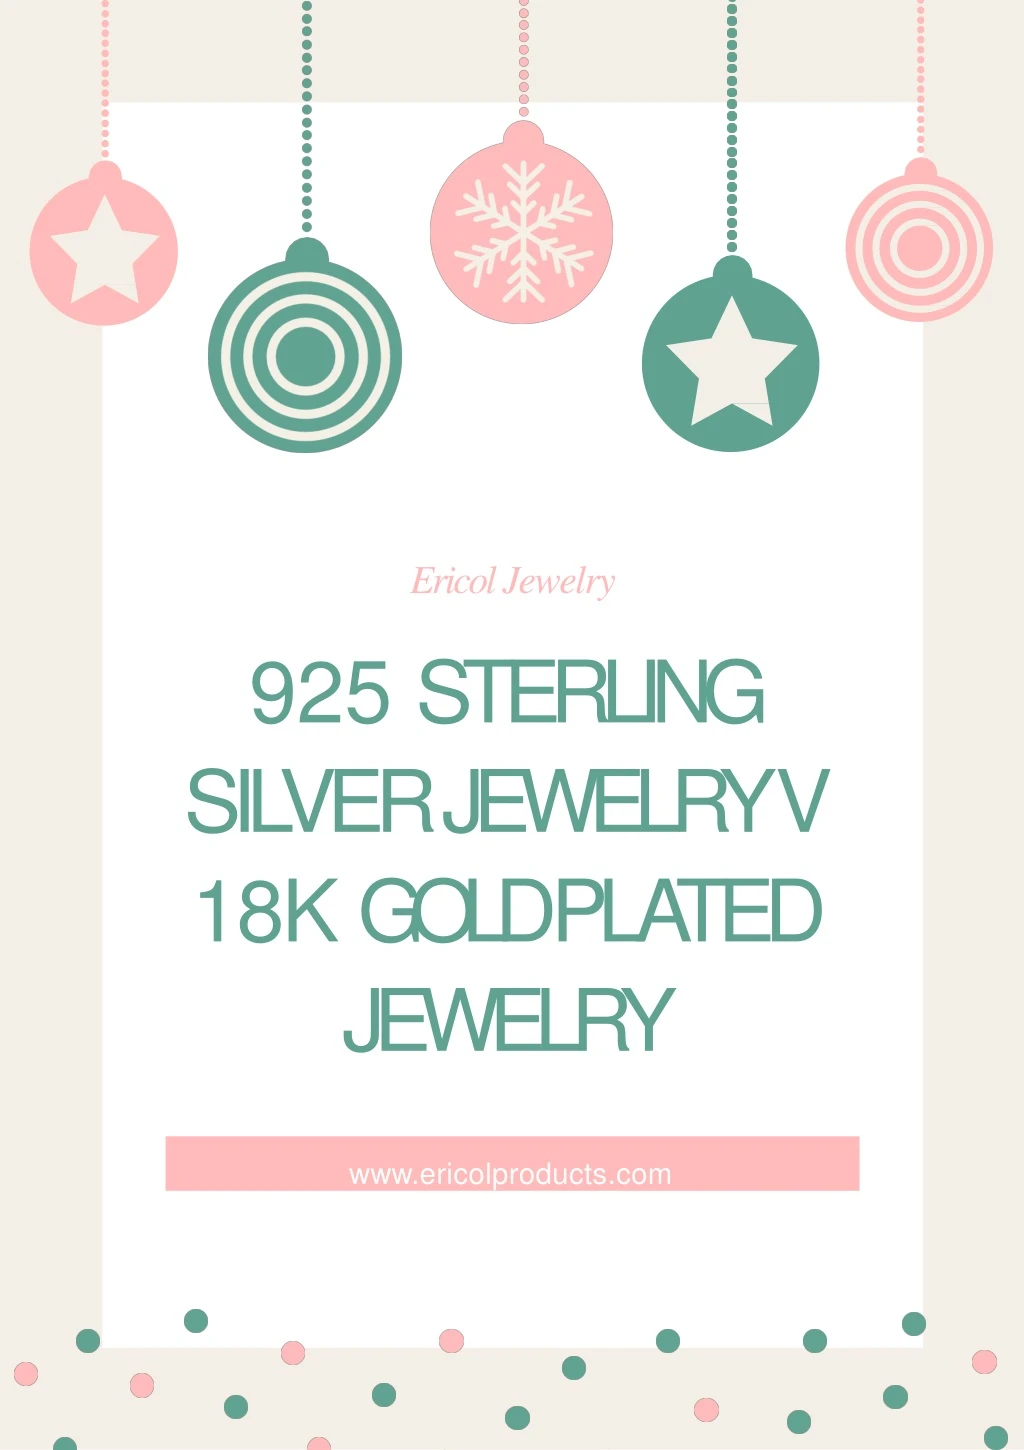 ericol jewelry 925 sterling silver jewelry